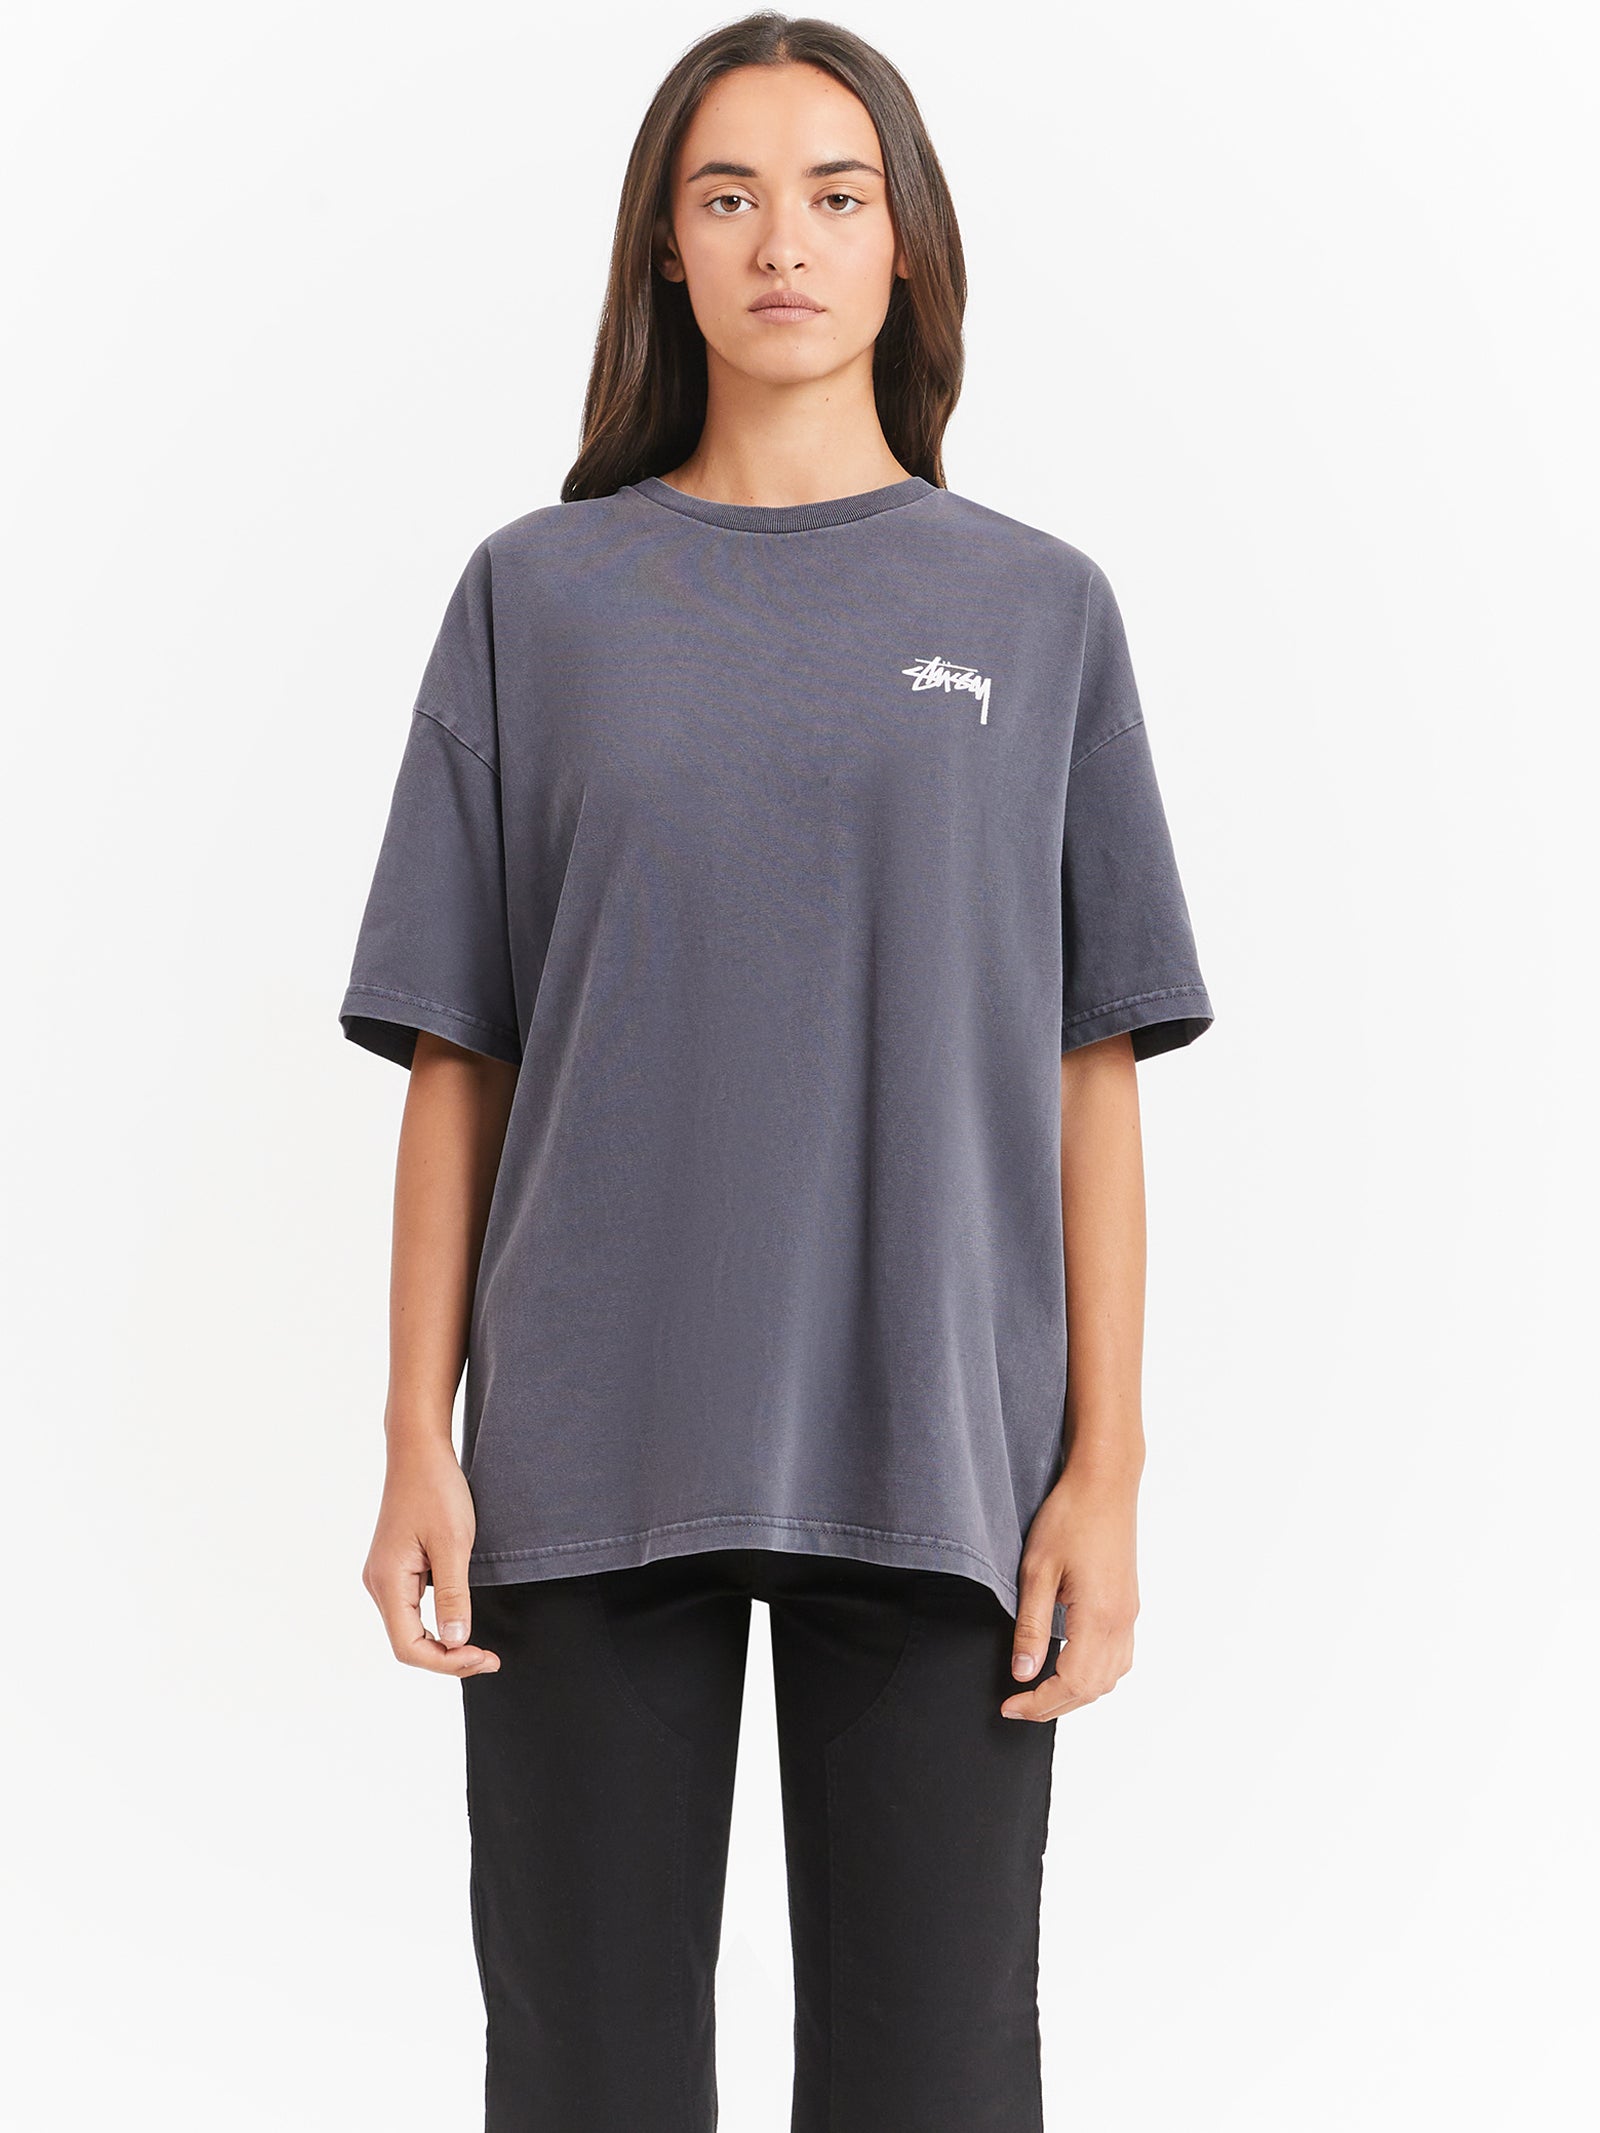 WeeReplica  Chanel Women'S Stylish Oversized T-Shirt